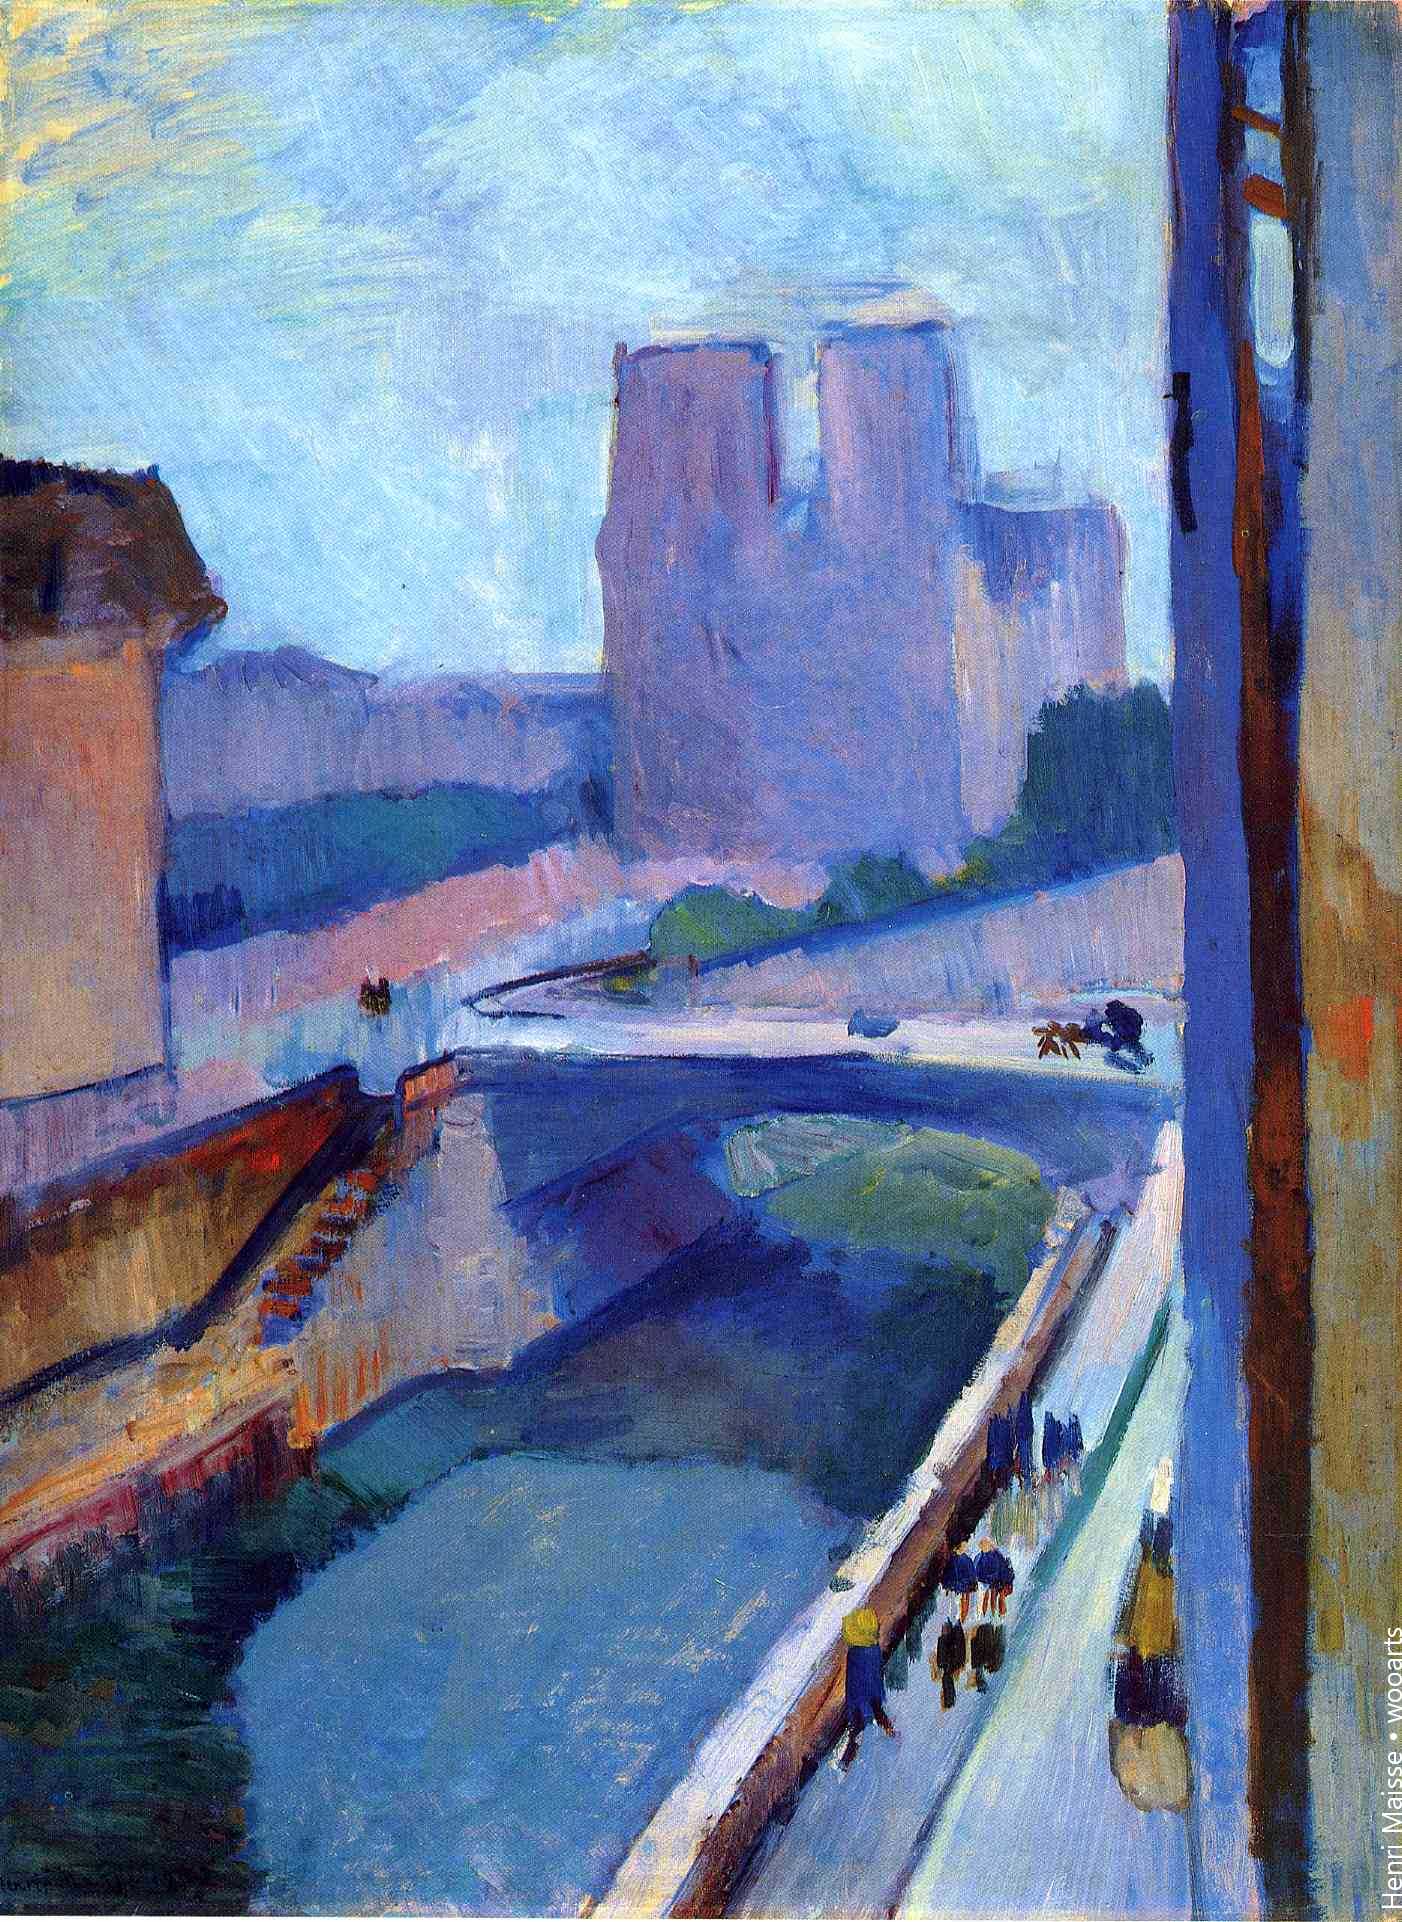 Henri Matisse Landscape Painting 1902, Notre-Dame, une fin d'après-midi, oil on paper mounted on canvas, 72.4 x 54.6 cm, Albright-Knox Art Gallery